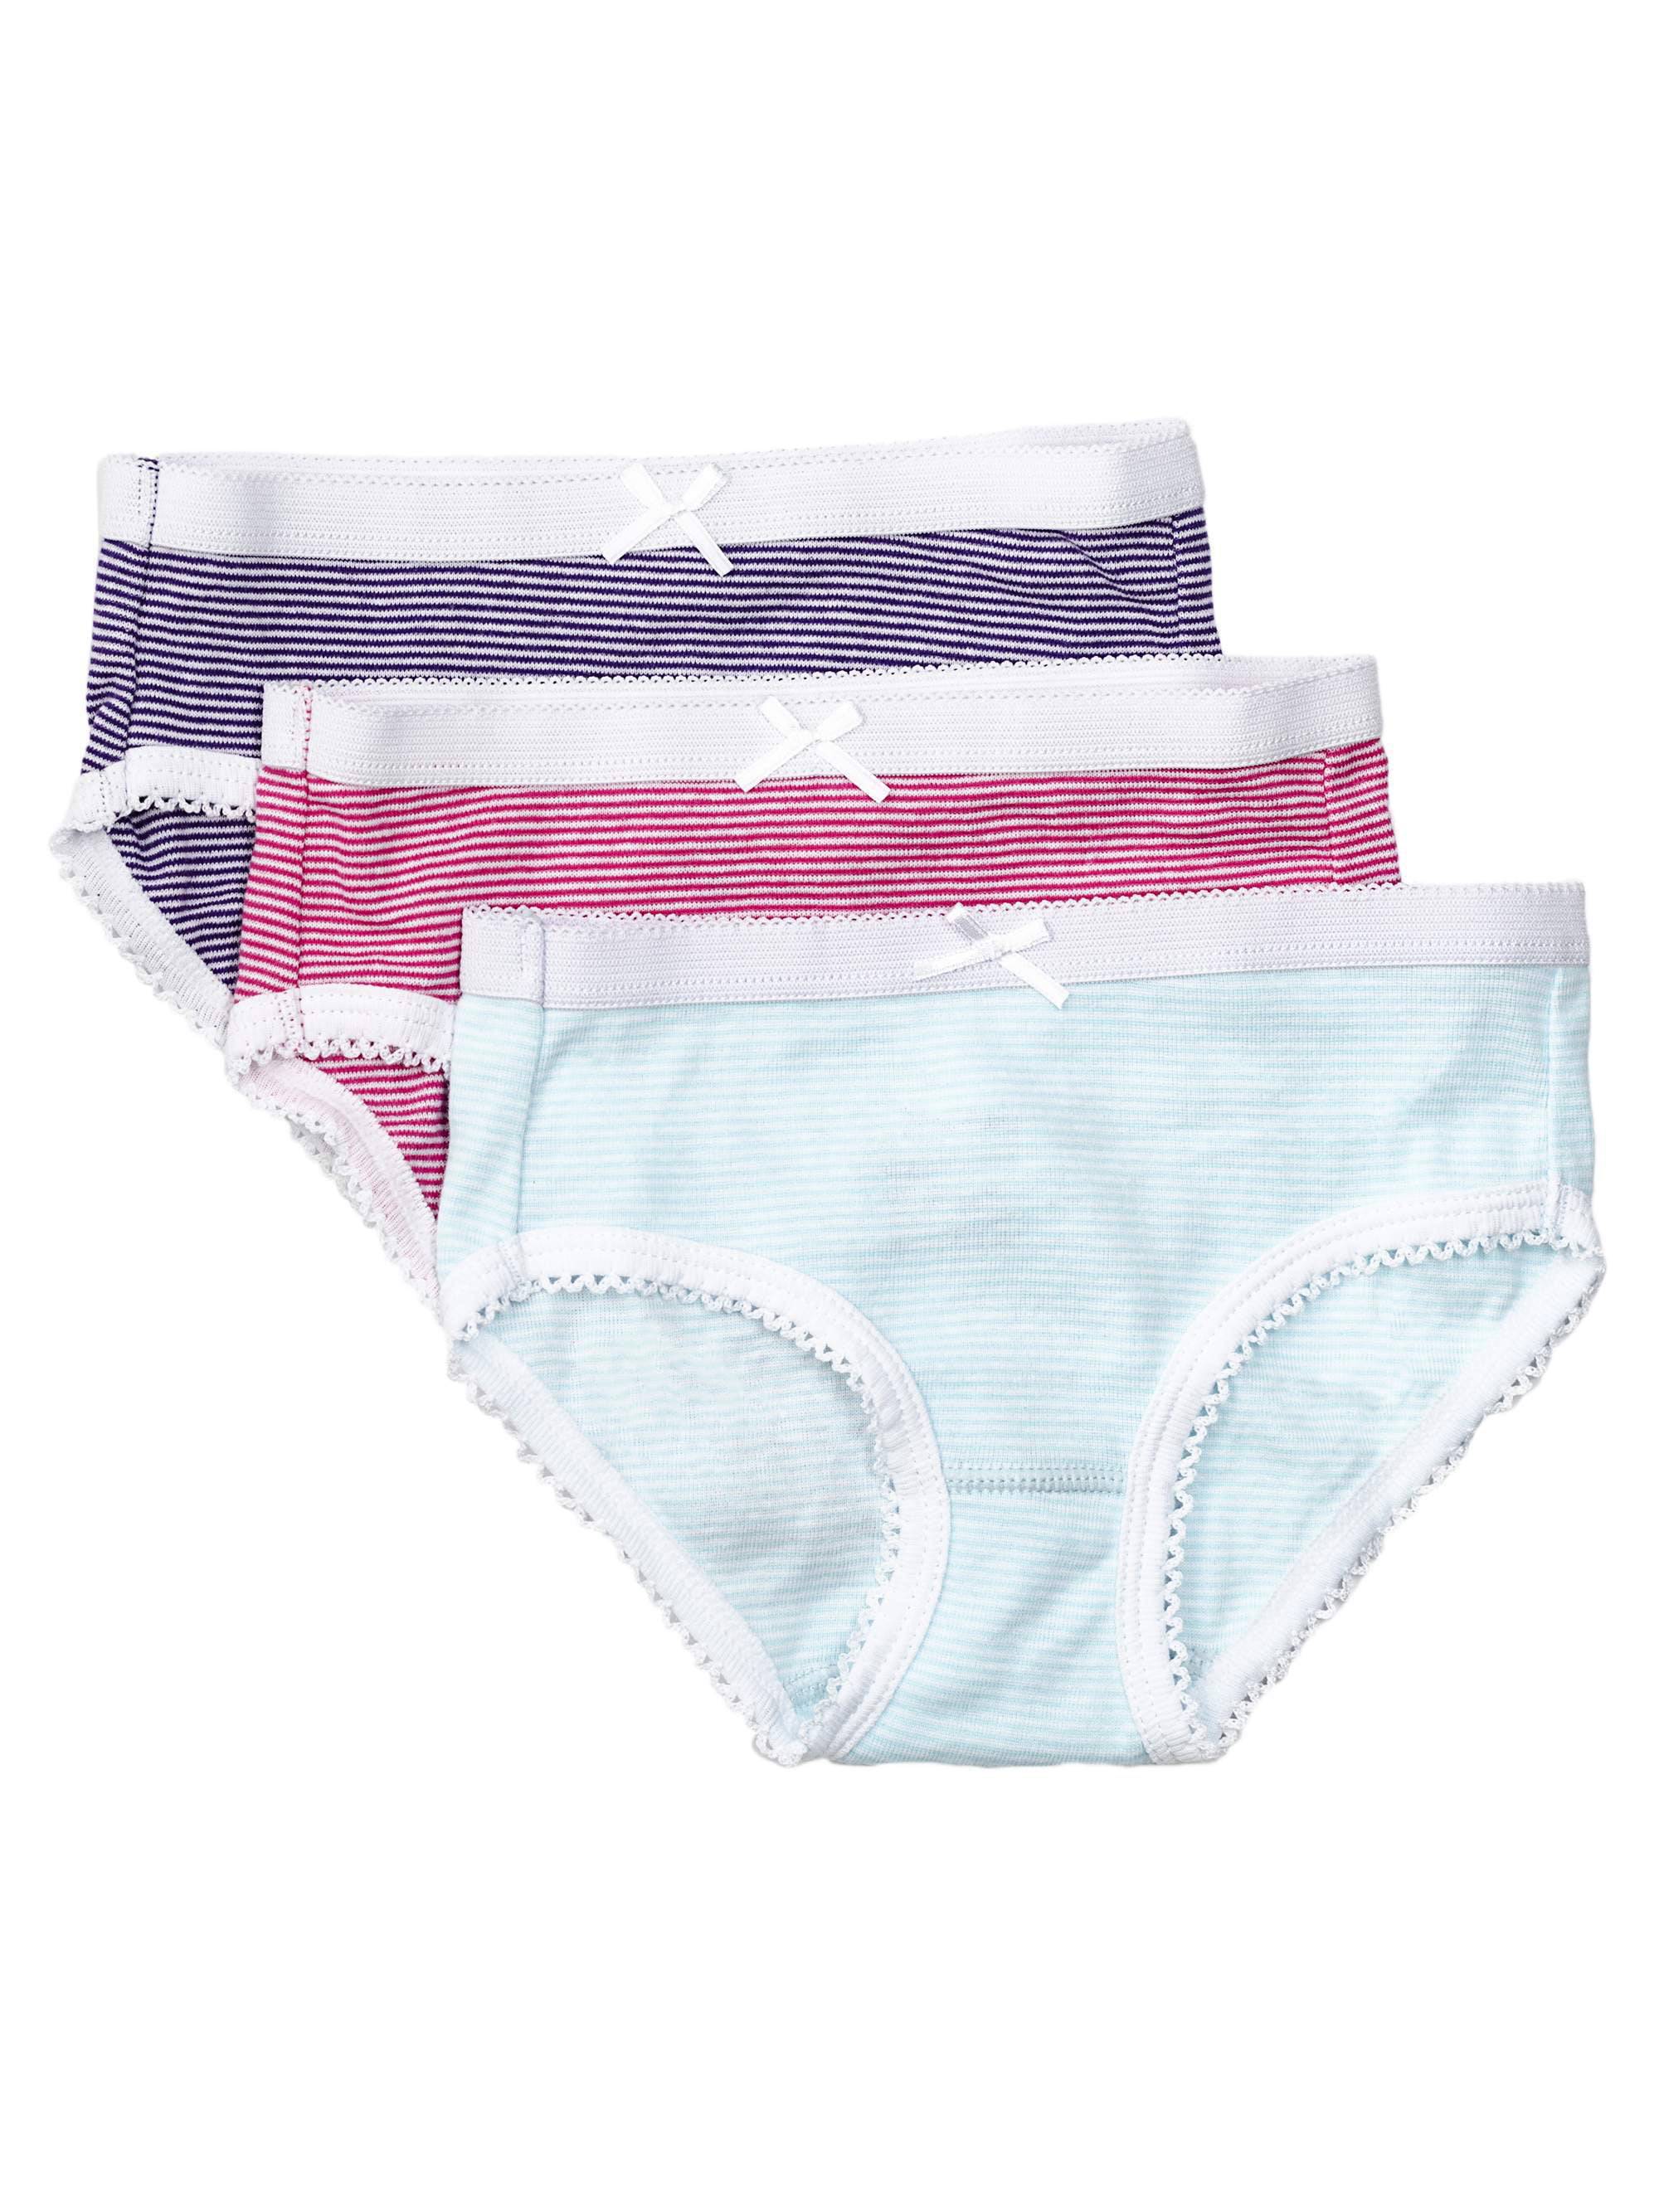 Feathers Girls Mod Print Tagless Briefs Underwear Super Soft Panties 3-Pack